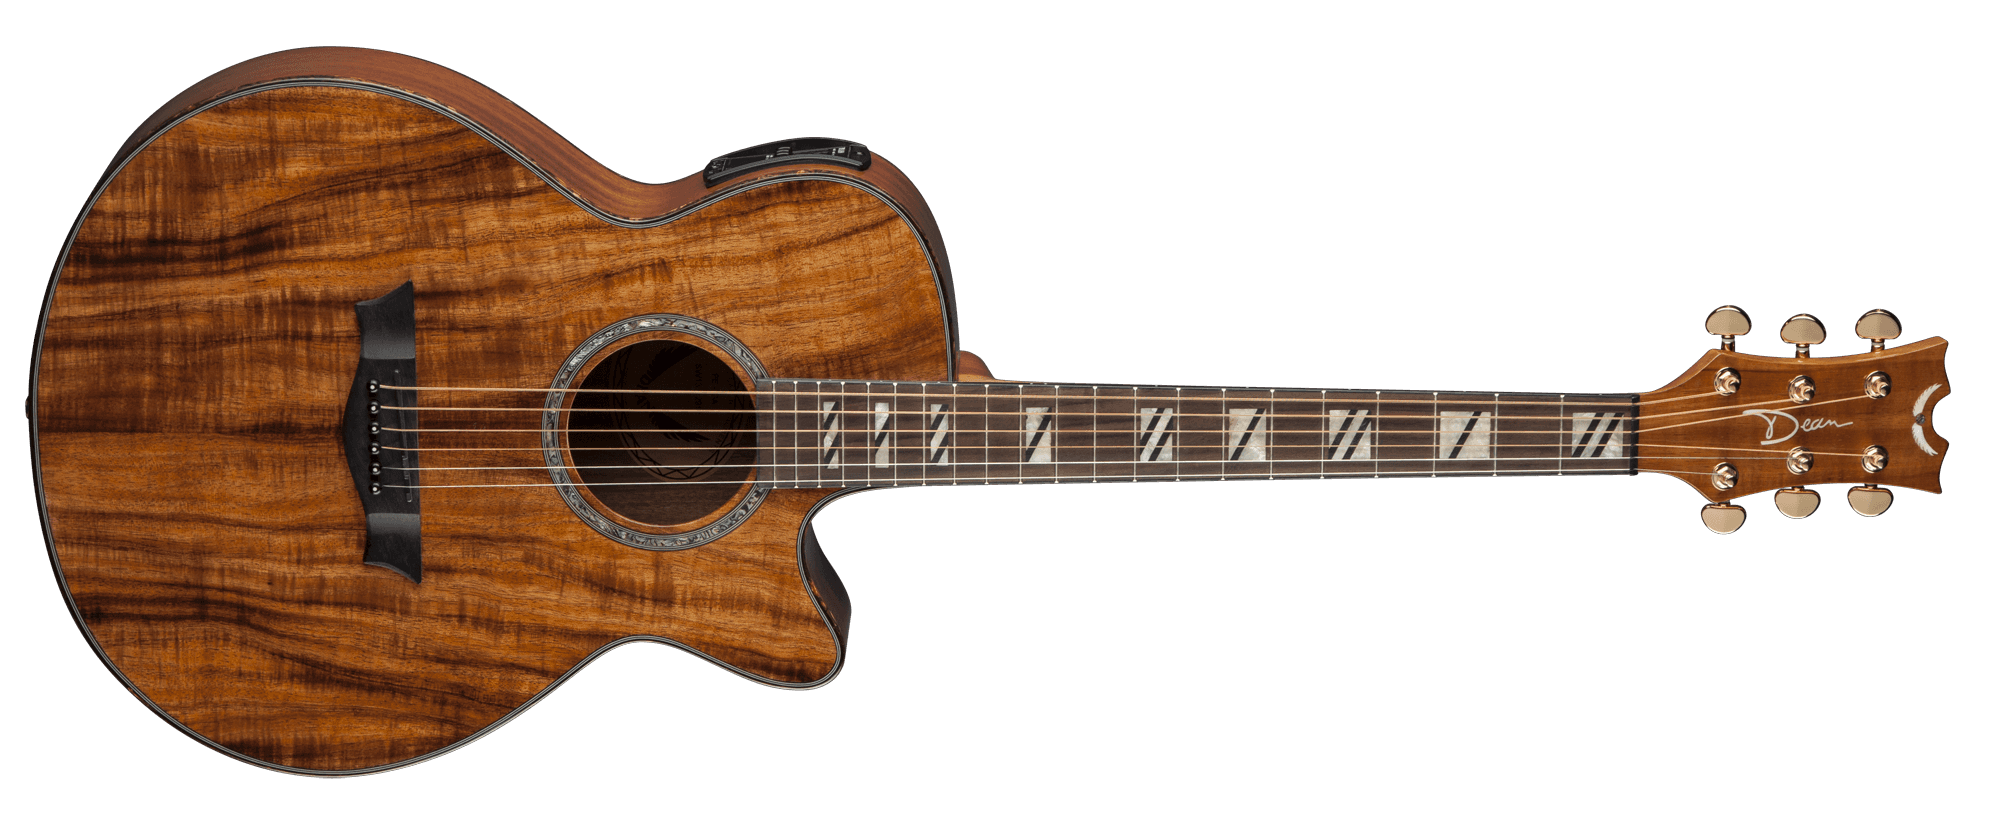 Imágenes Transparentes de guitarra de madera